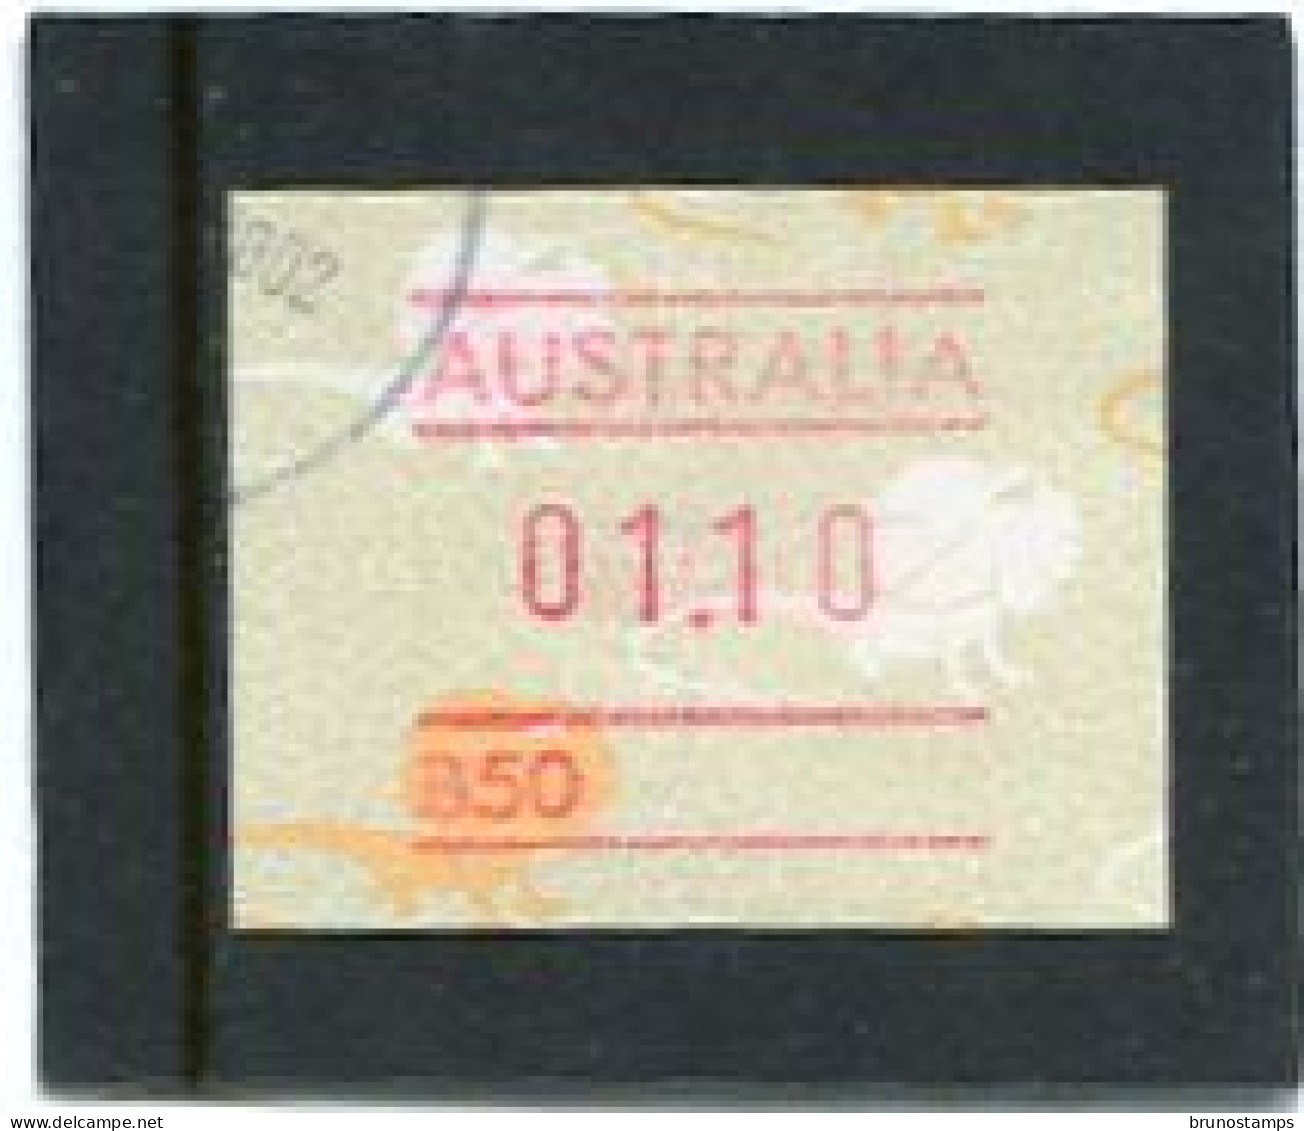 AUSTRALIA - 1989  1.10$  FRAMA  LIZARD   NO POSTCODE  B50  FINE USED - Vignette [ATM]